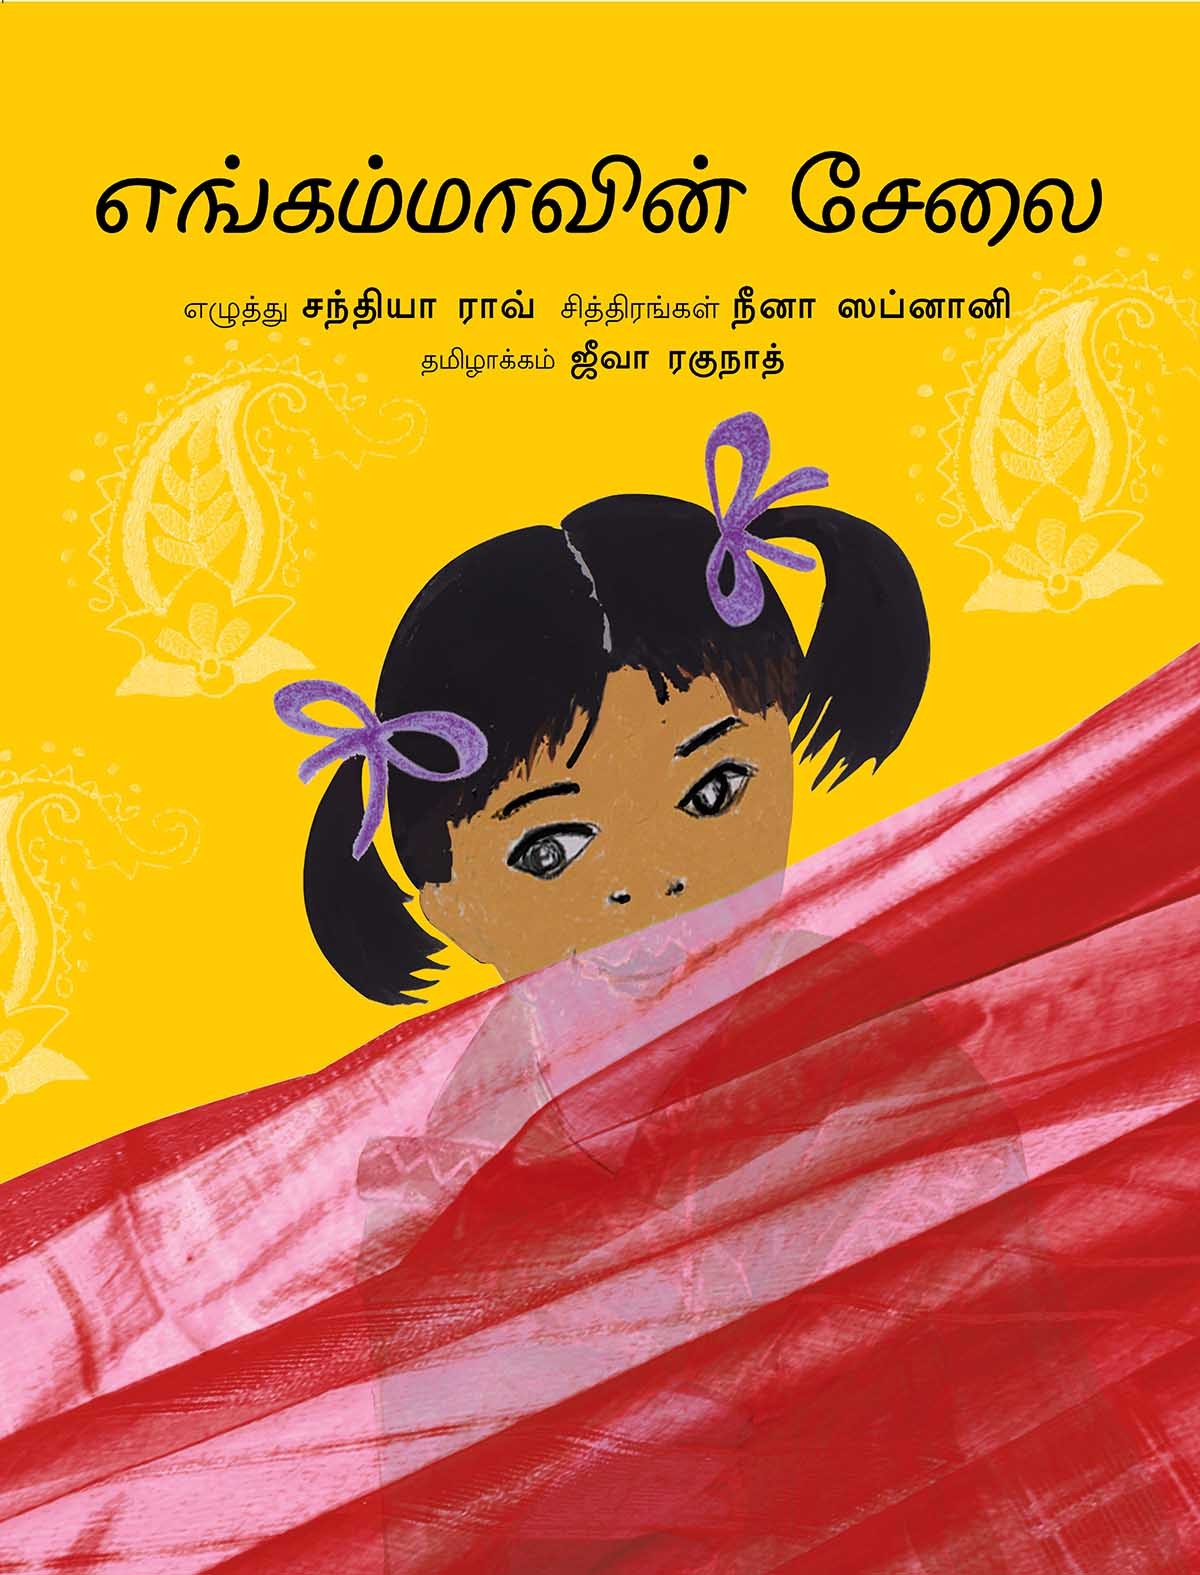 My Mother's Sari/Engammavin Saylai (Tamil)